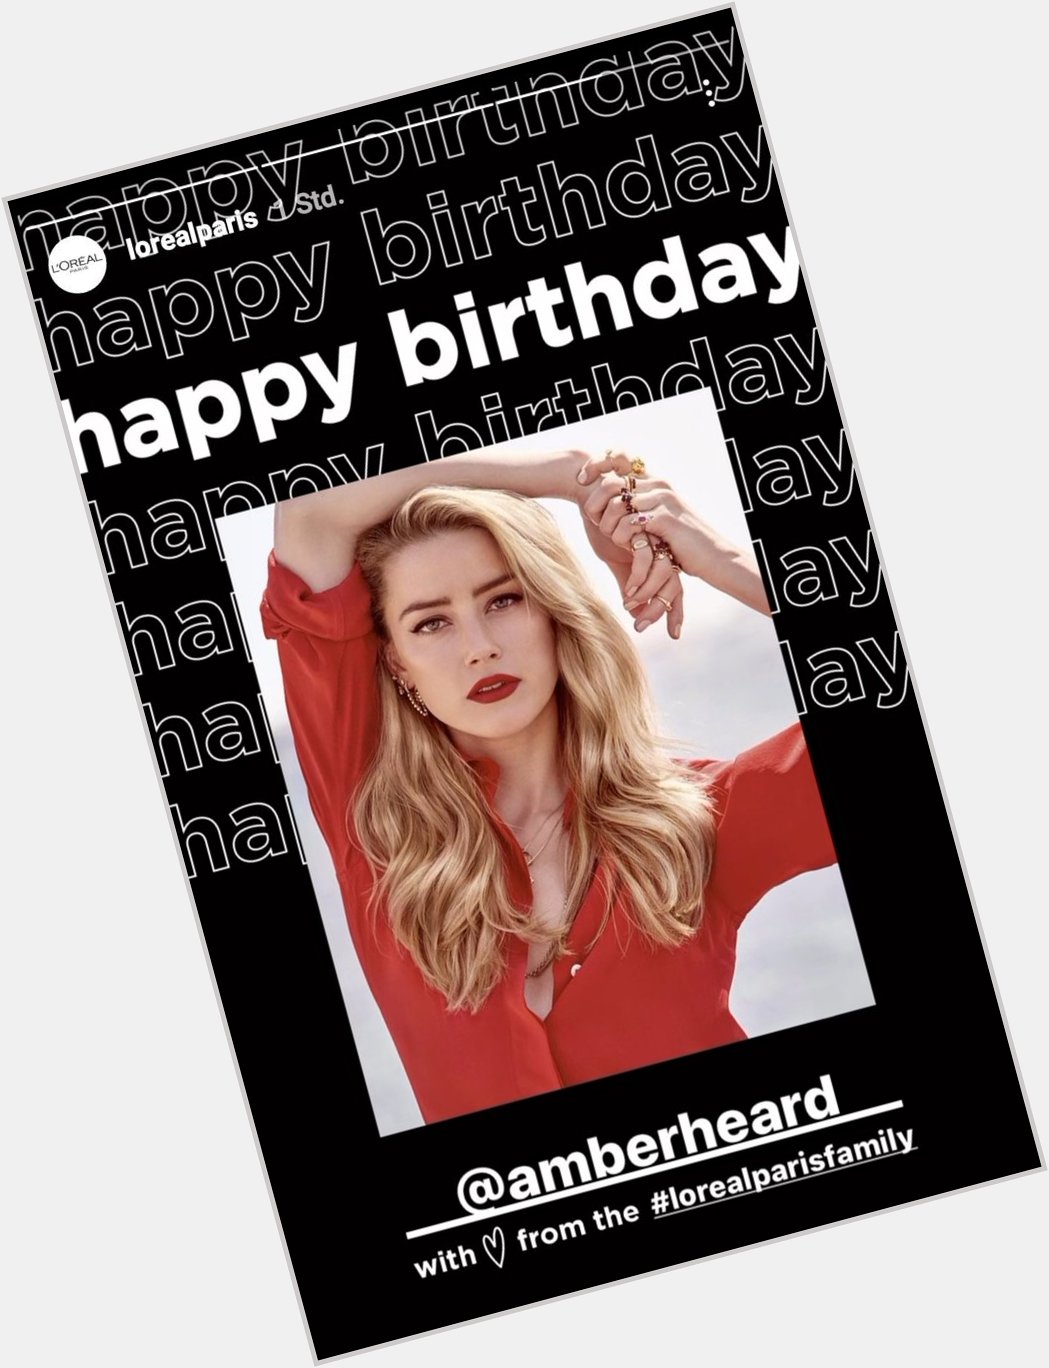 L\Oréal wishing Amber Heard a happy birthday   